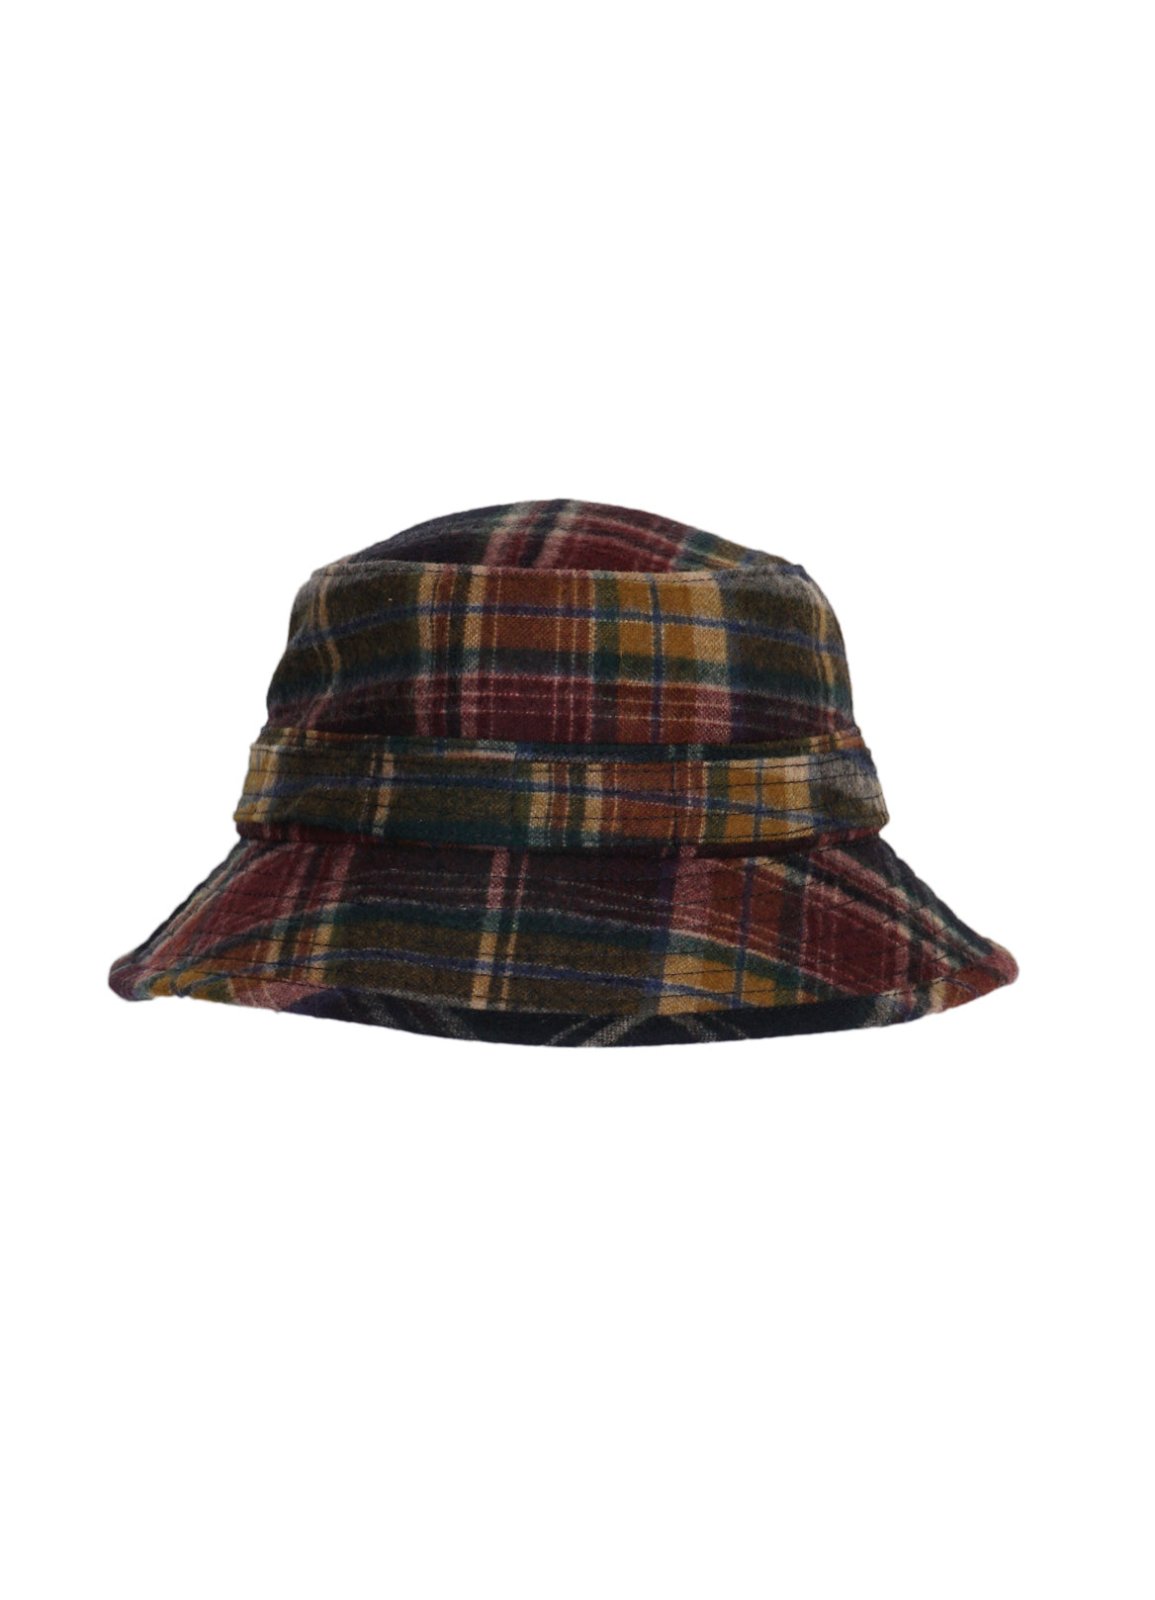 HANSEN GARMENTS - EDVARD | Bucket Hat With Earflaps | Multi Col. Check - HANSEN Garments